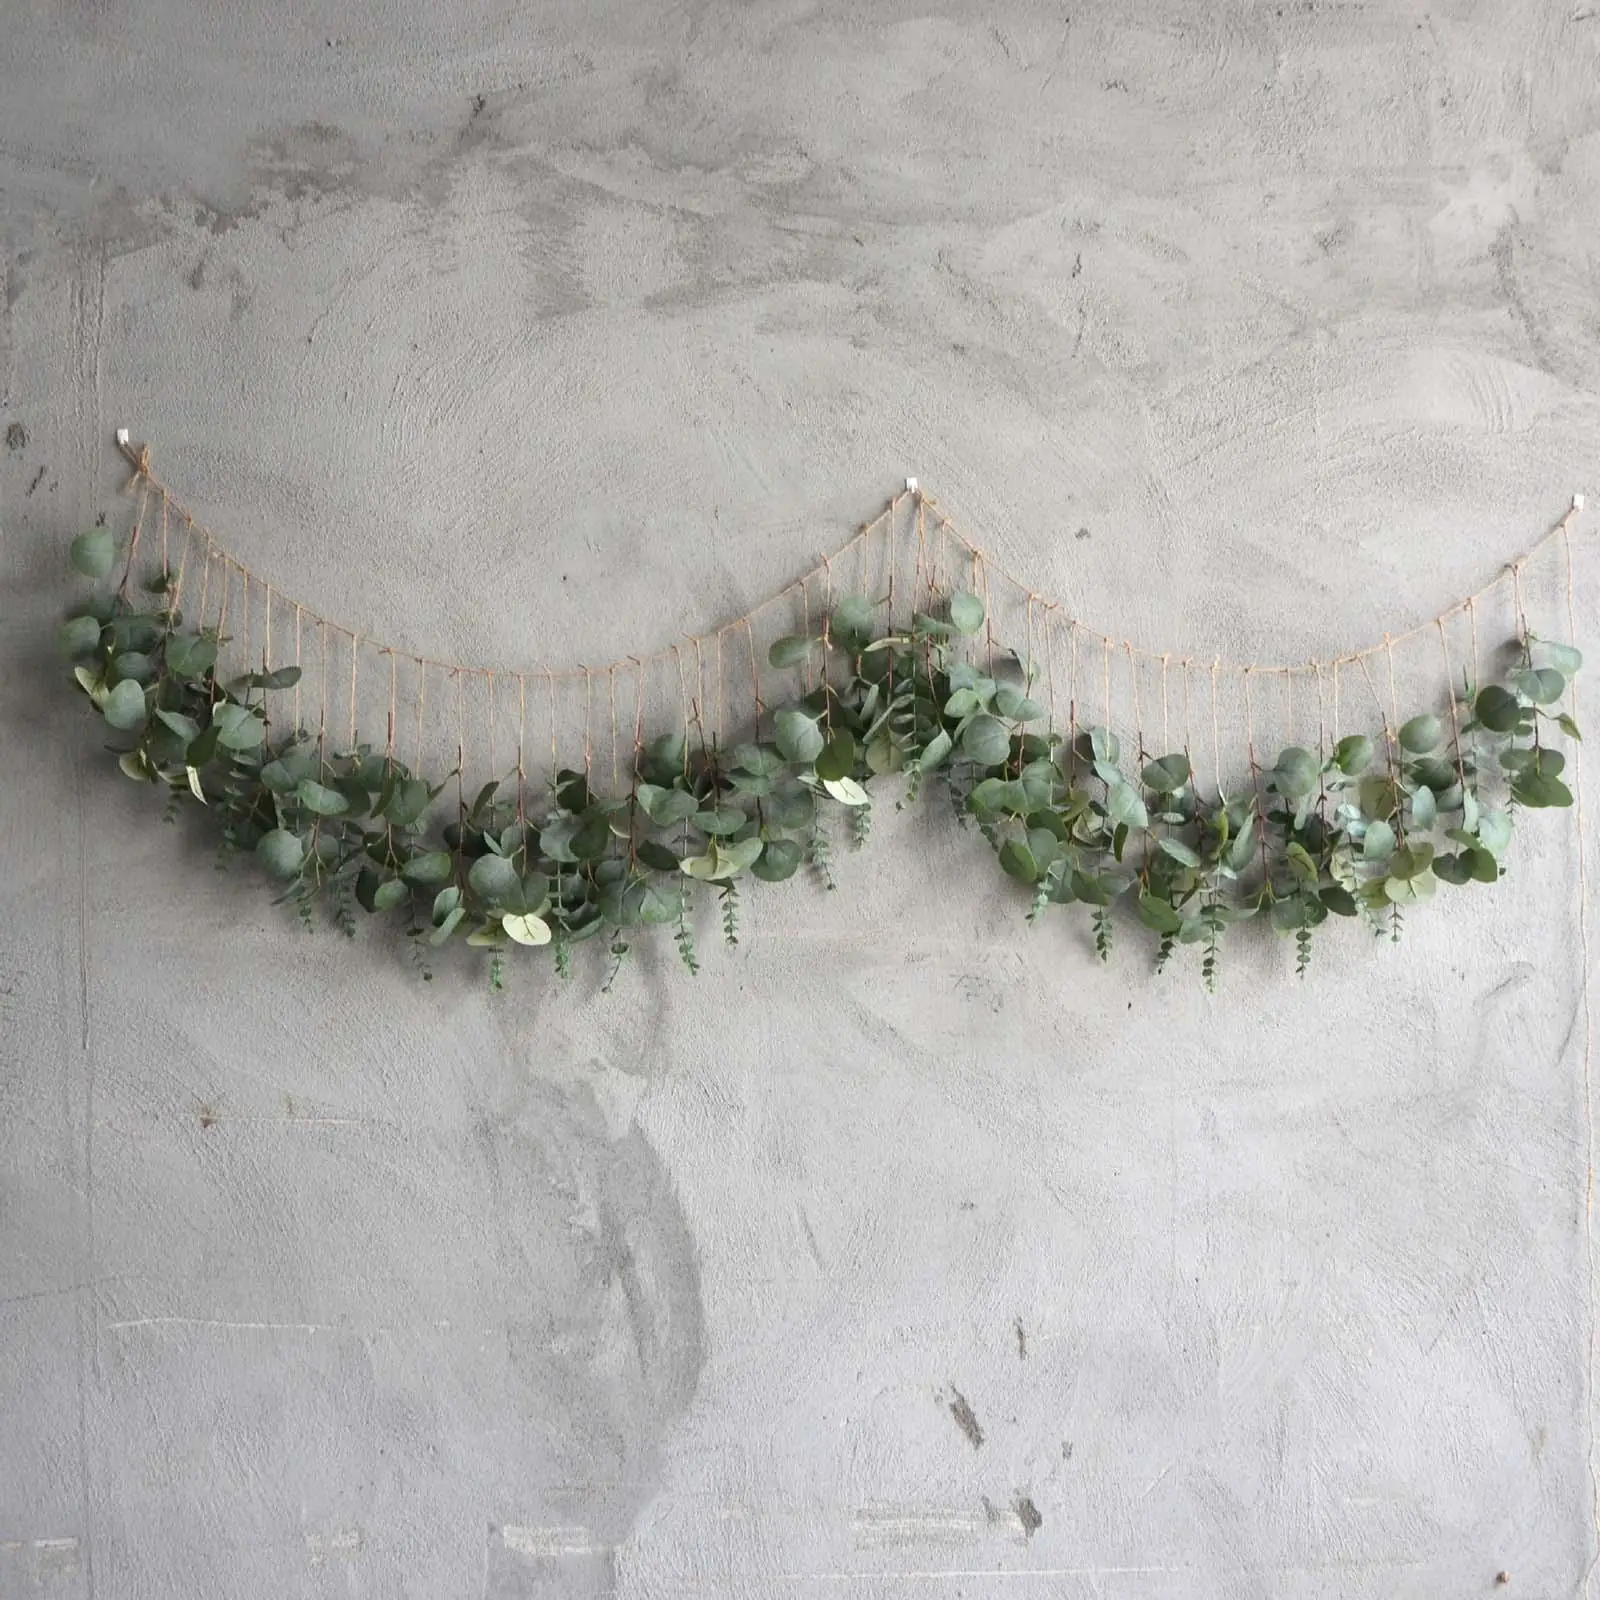 Artificial Eucalyptus Leaves Decoration DIY Background Cute Boho for Bathroom Kitchen Home Indoor Outdoor Bedroom